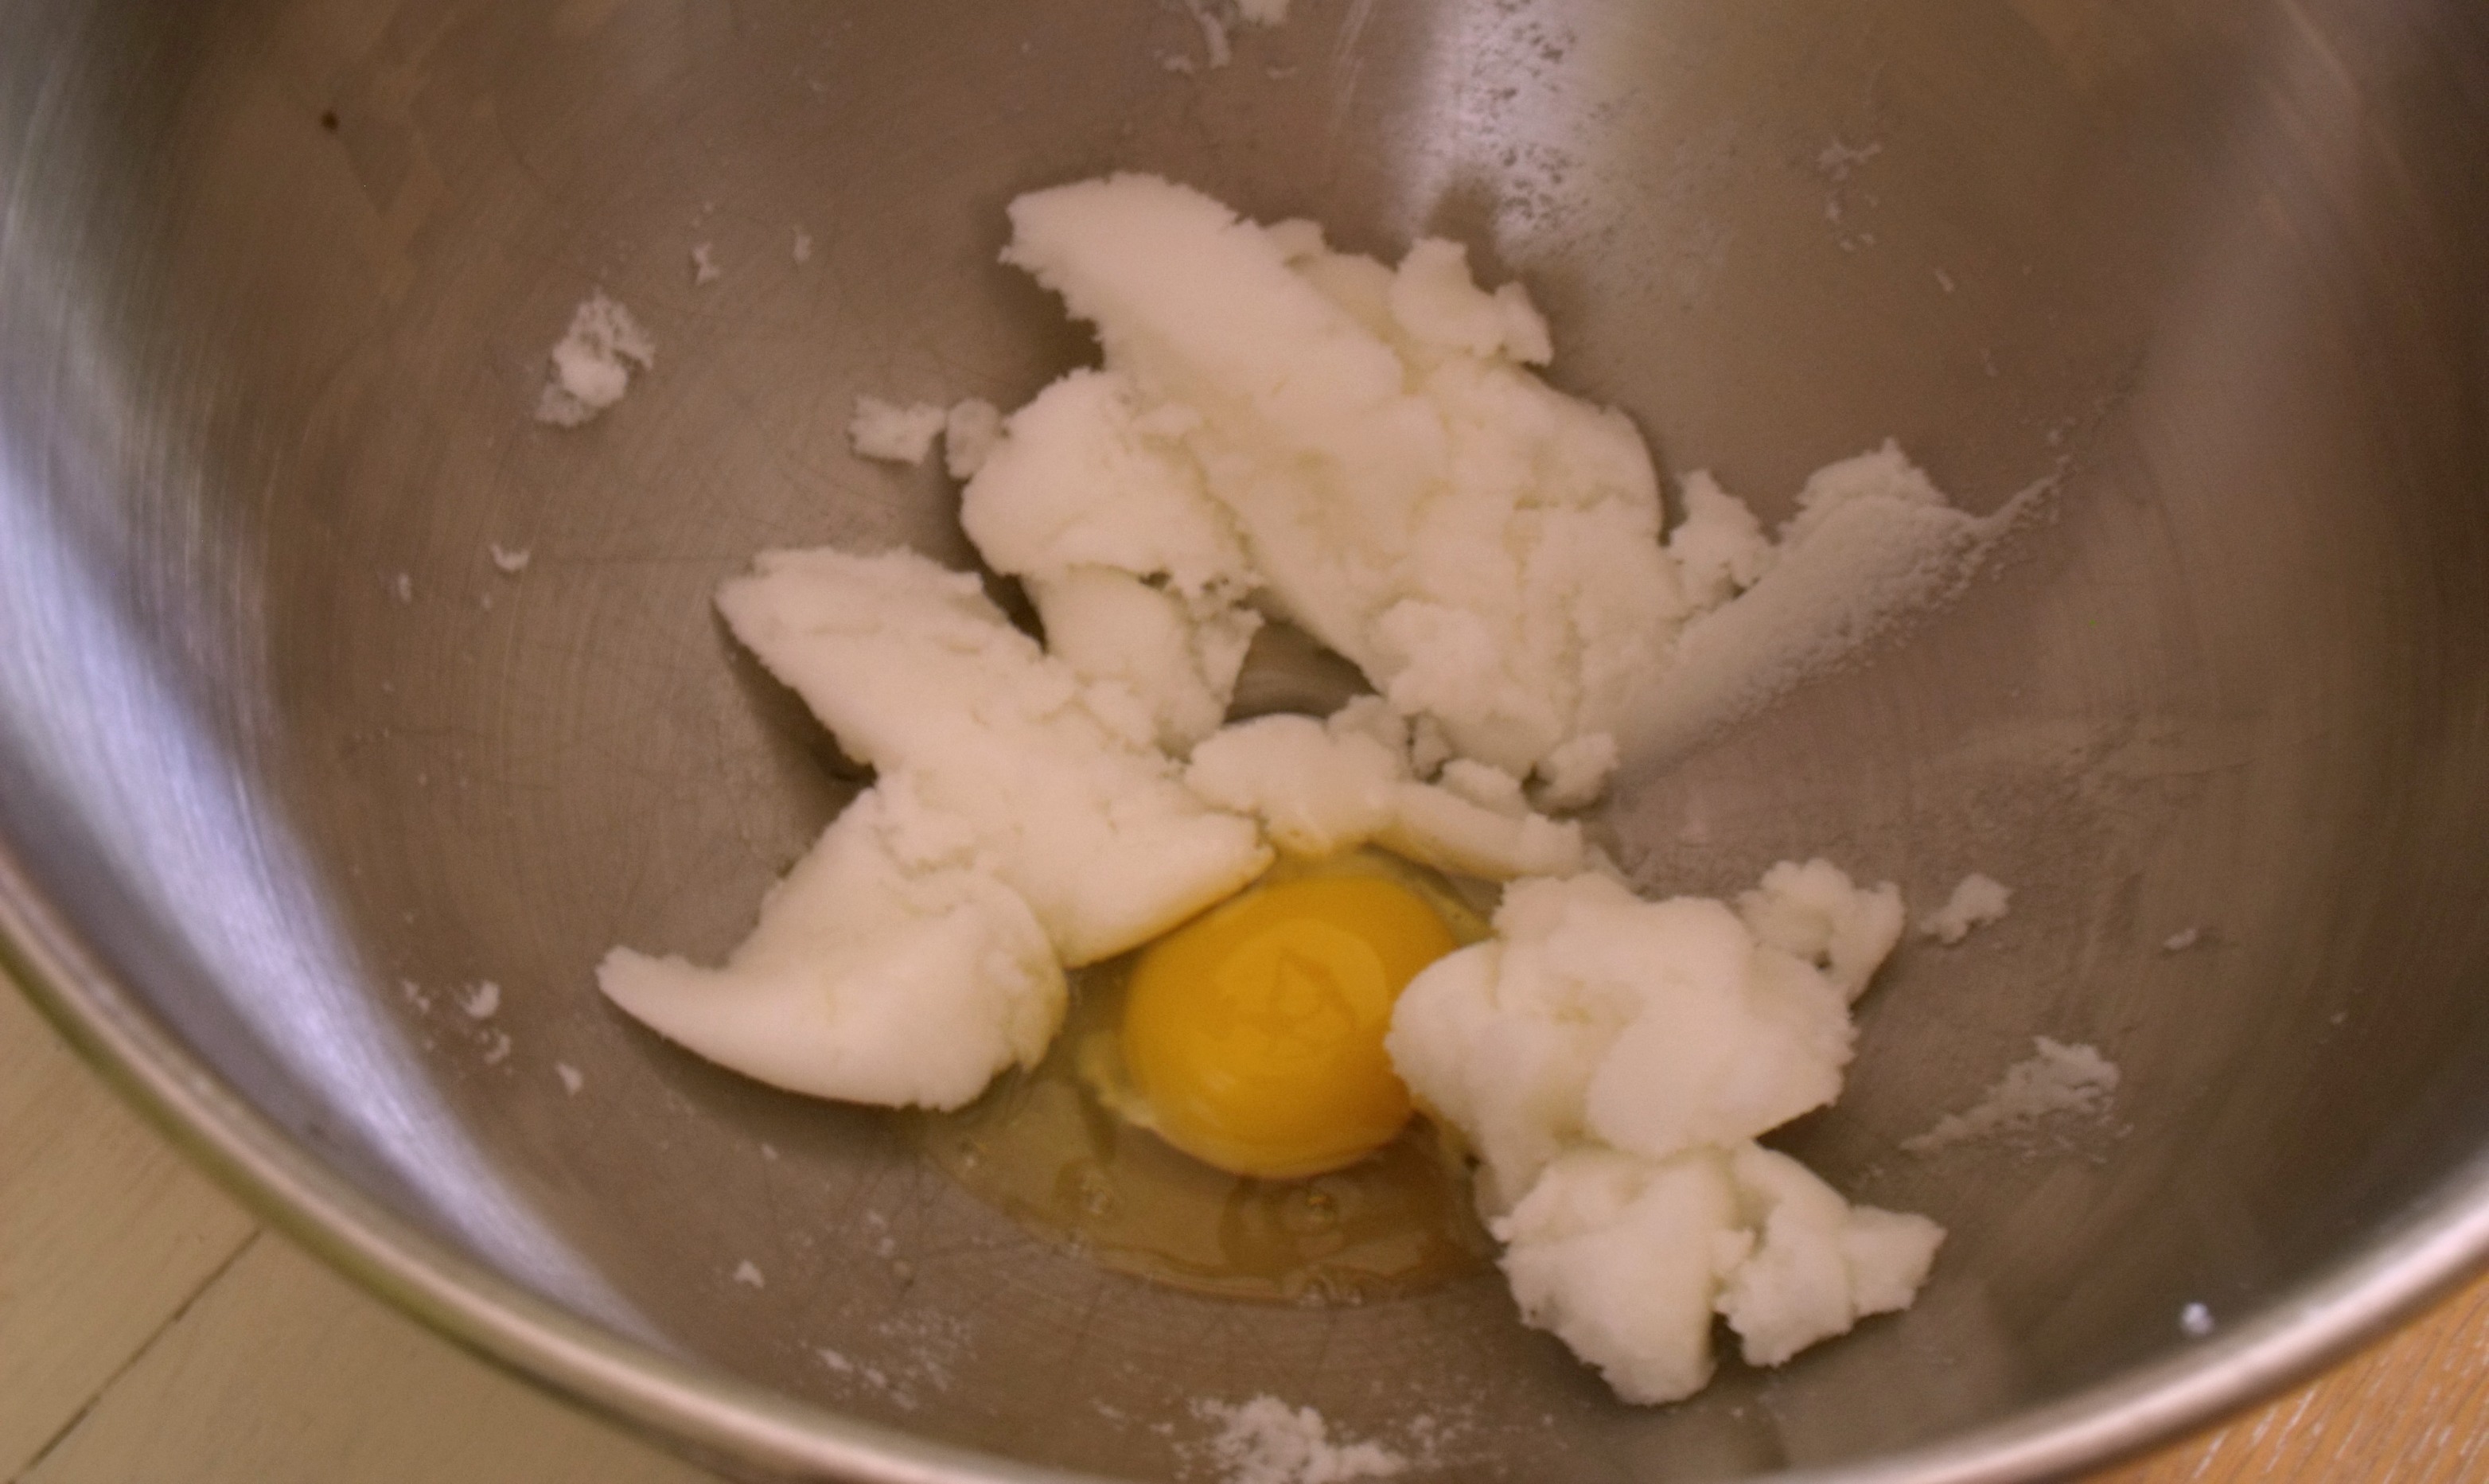 Adding egg to sugar